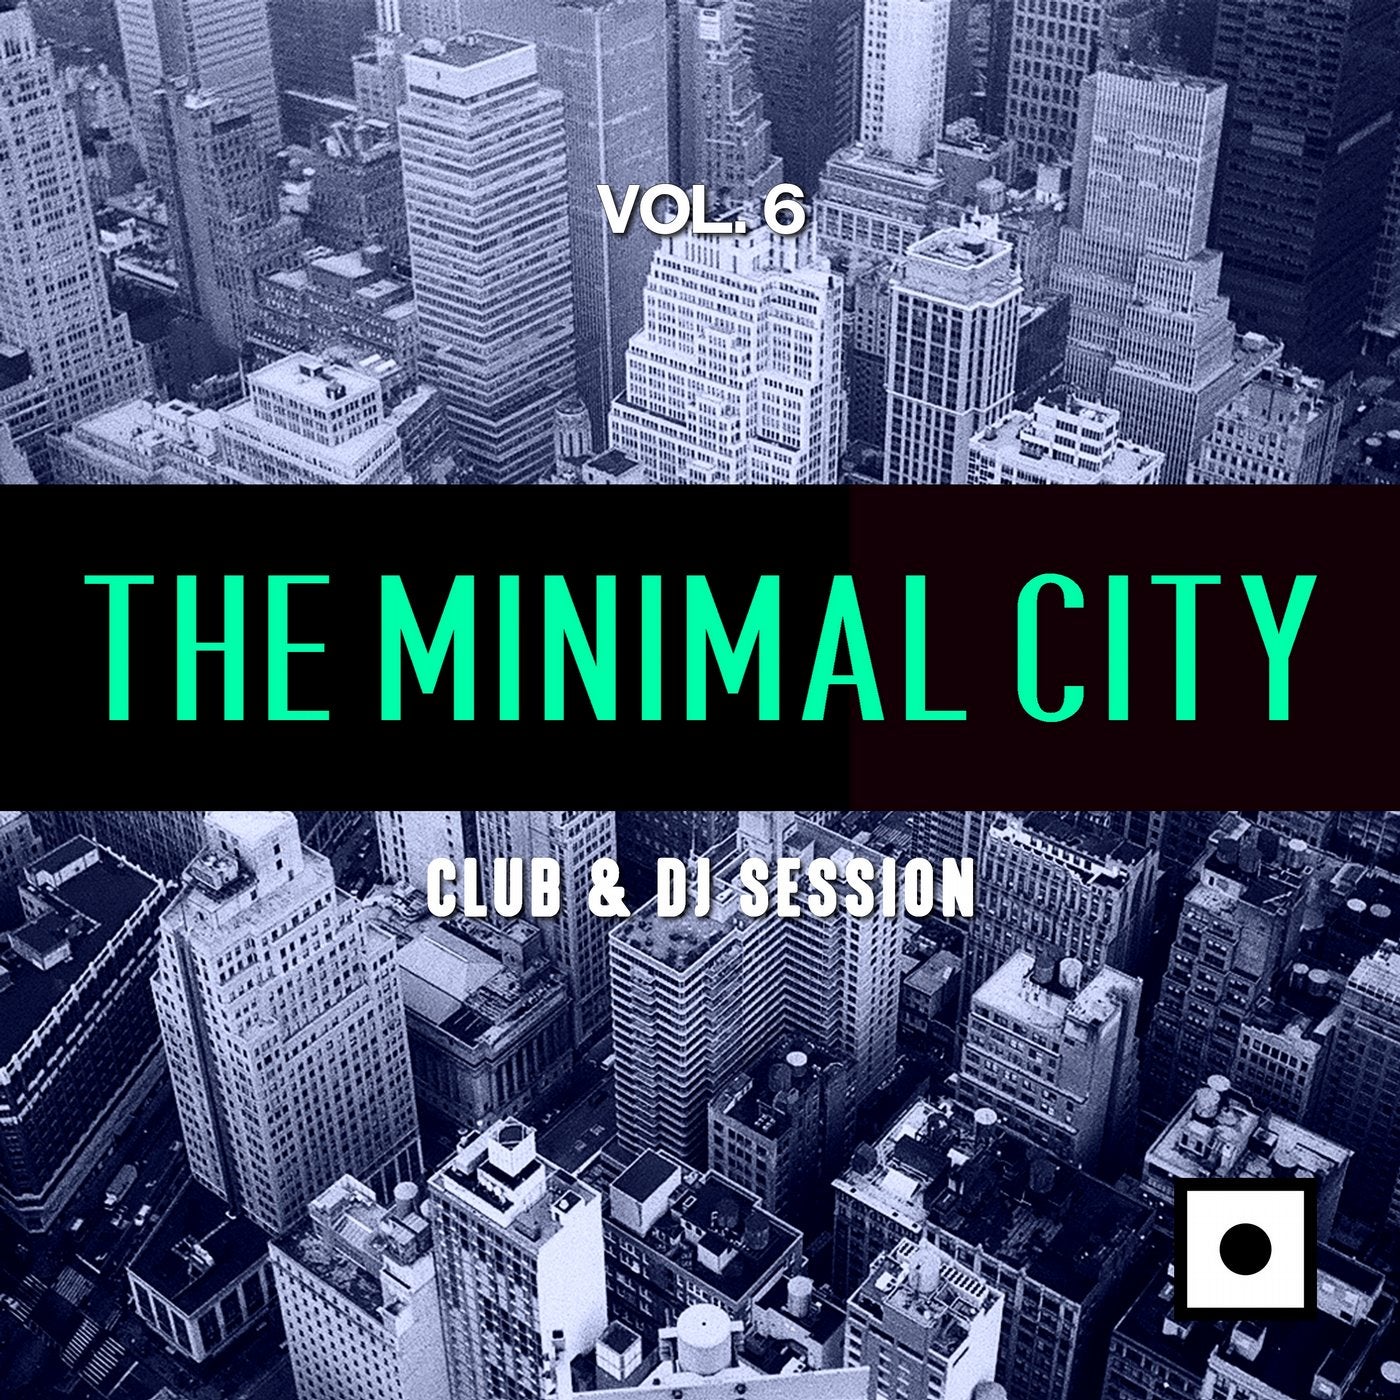 The Minimal City, Vol. 6 (Club & DJ Session)